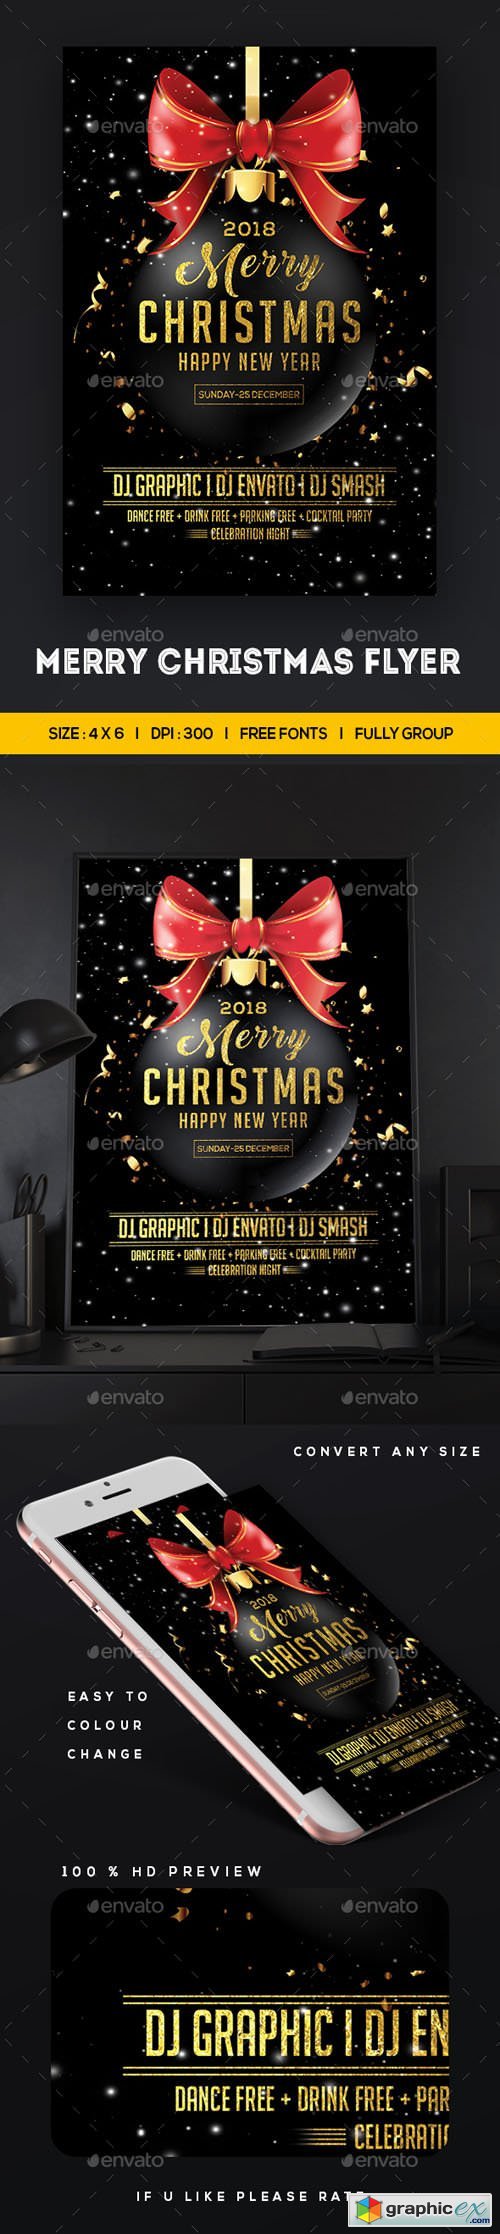 Merry Christmas Flyer 20950842